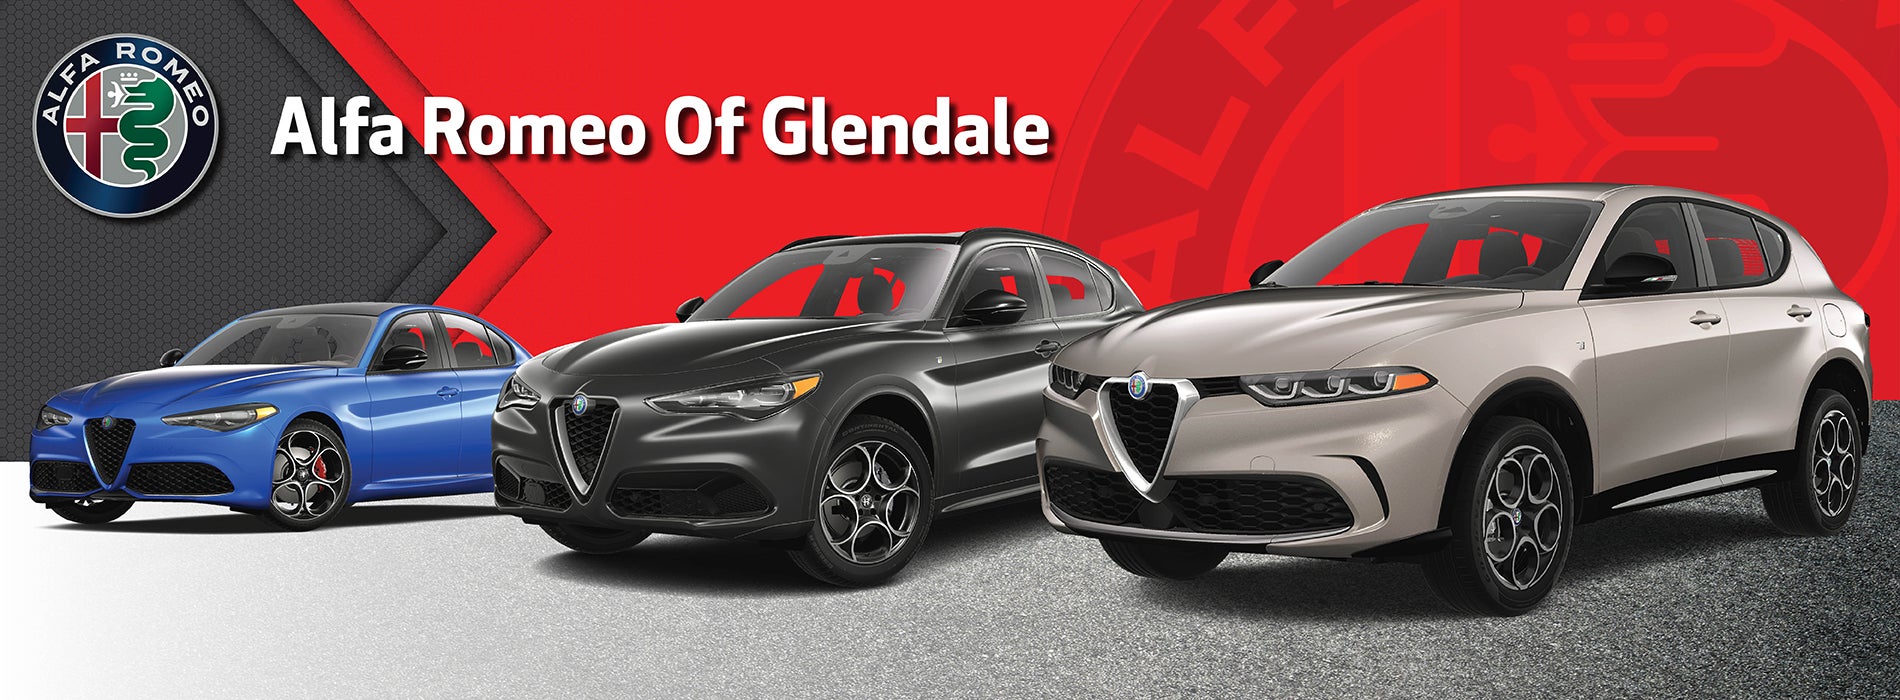 Alfa Romeo of Glendale